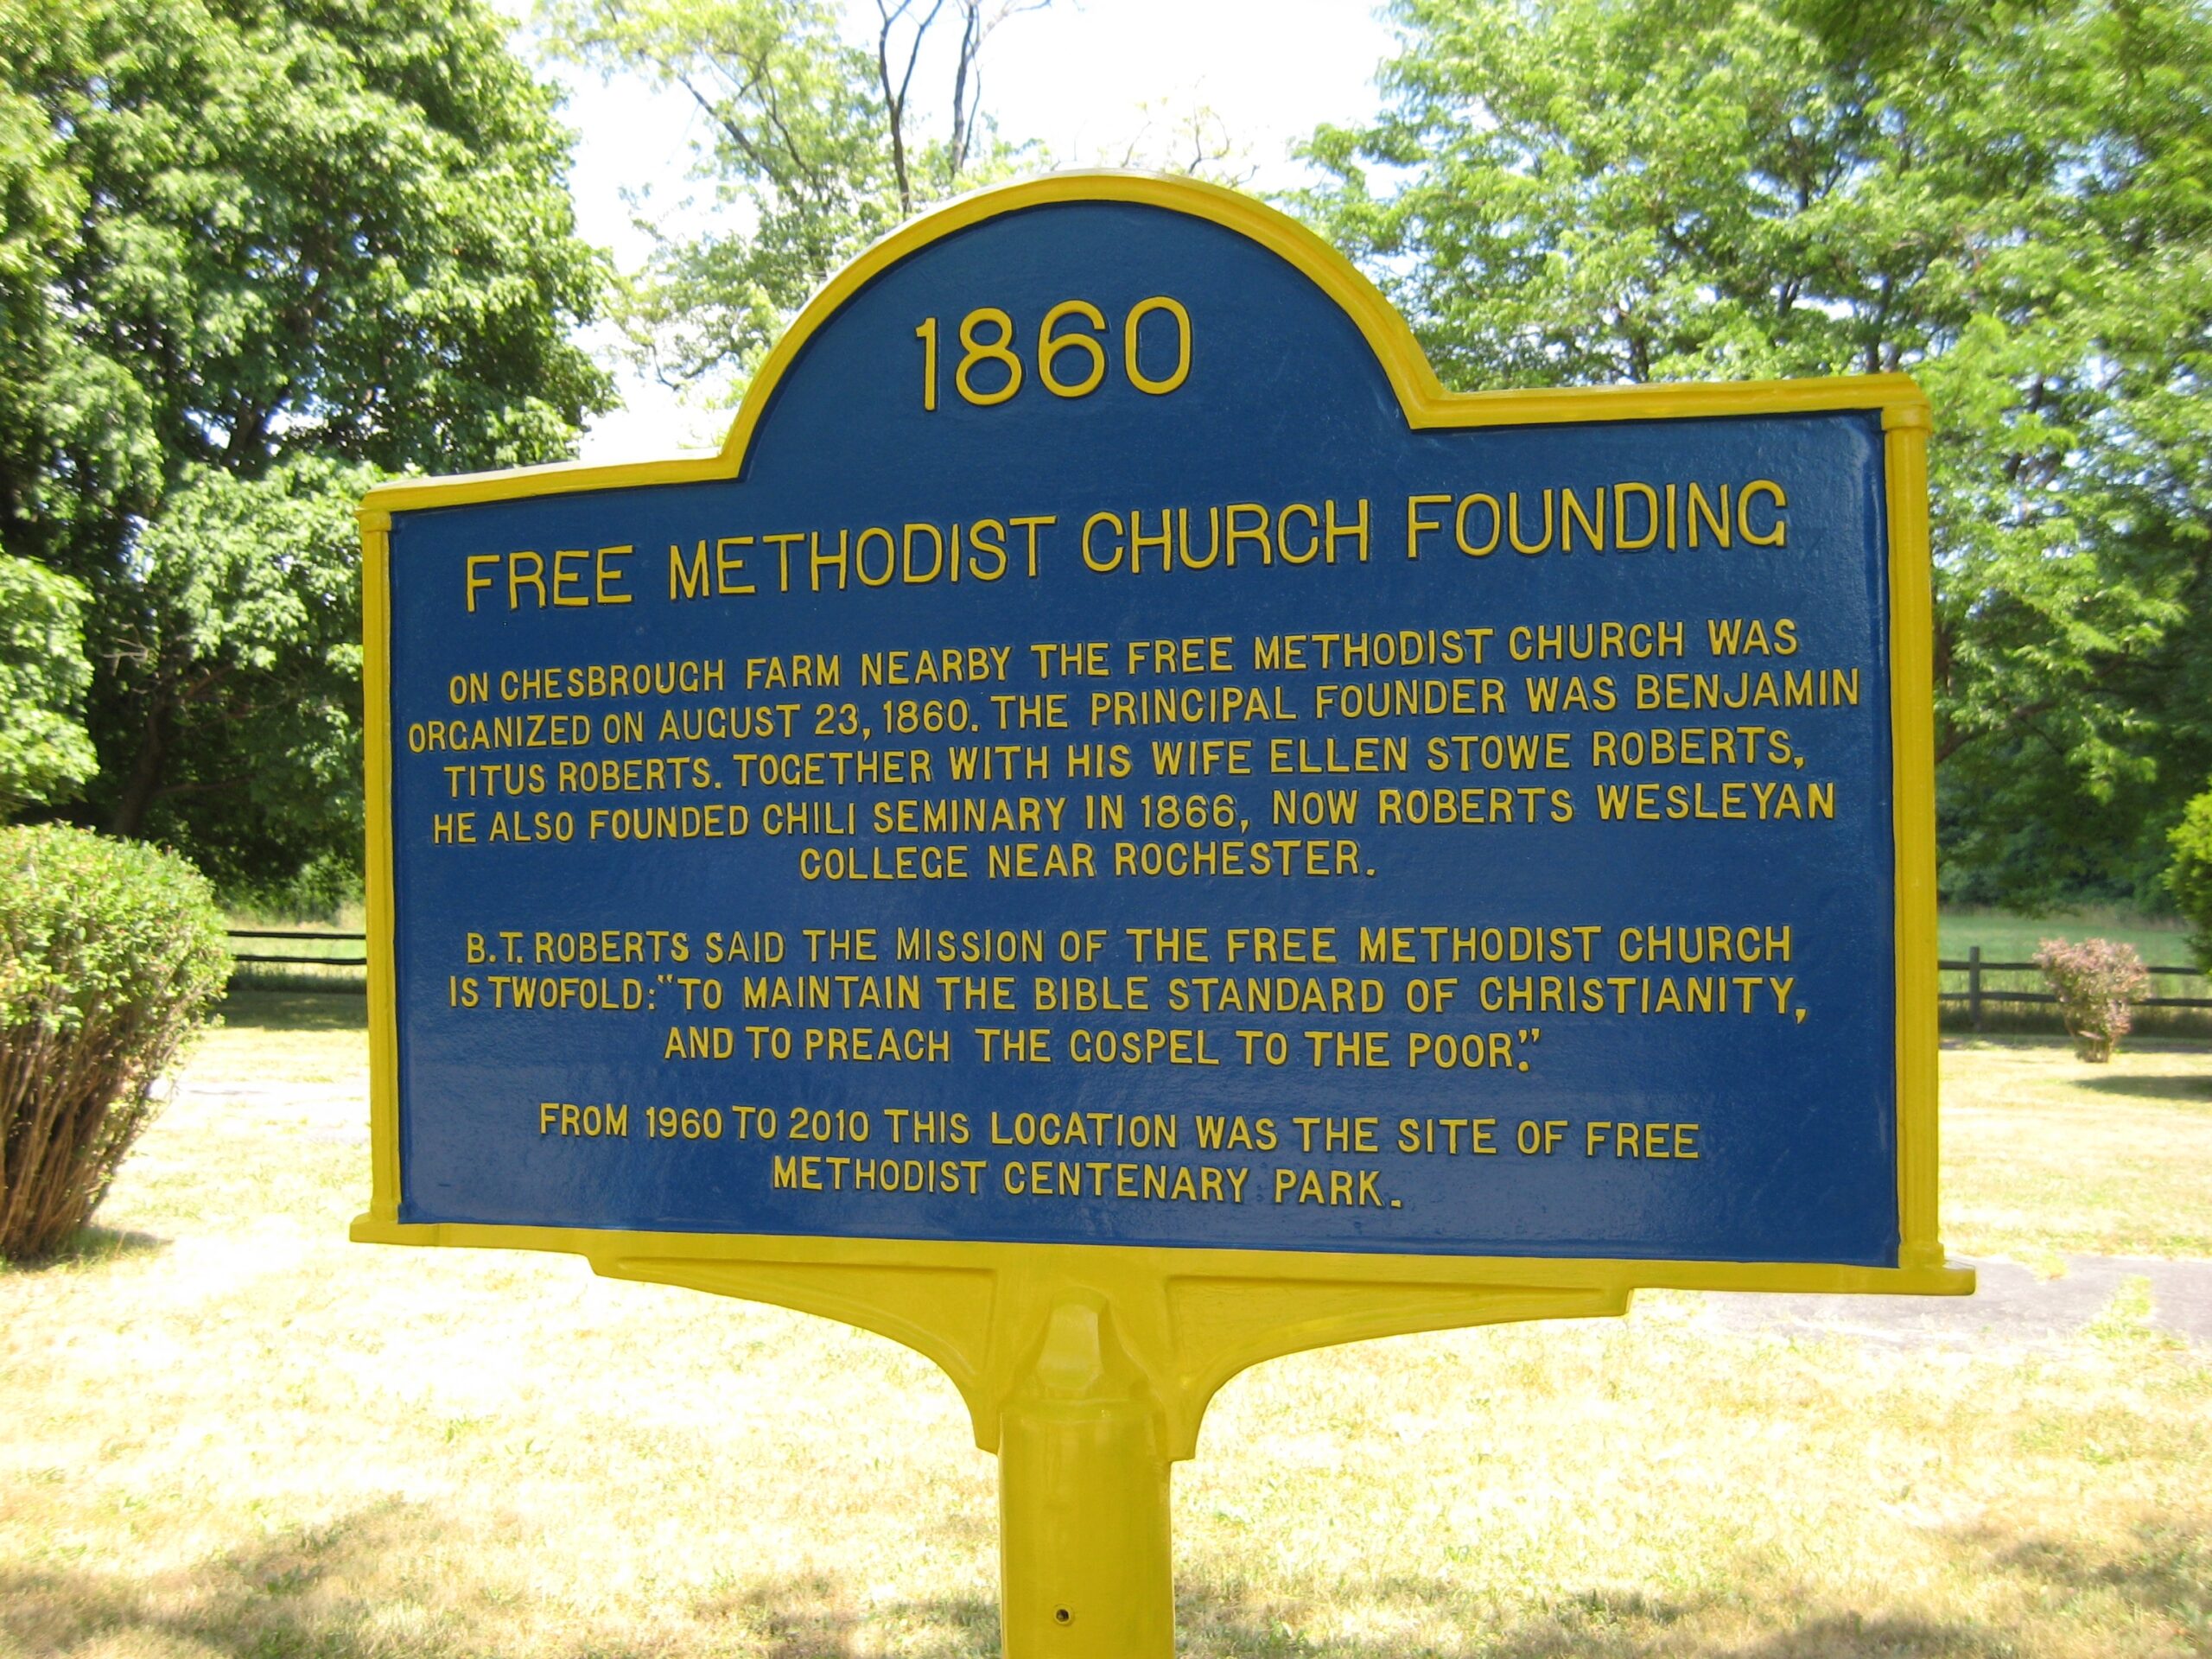 Plaque describing the founding of the Free Methodist Church